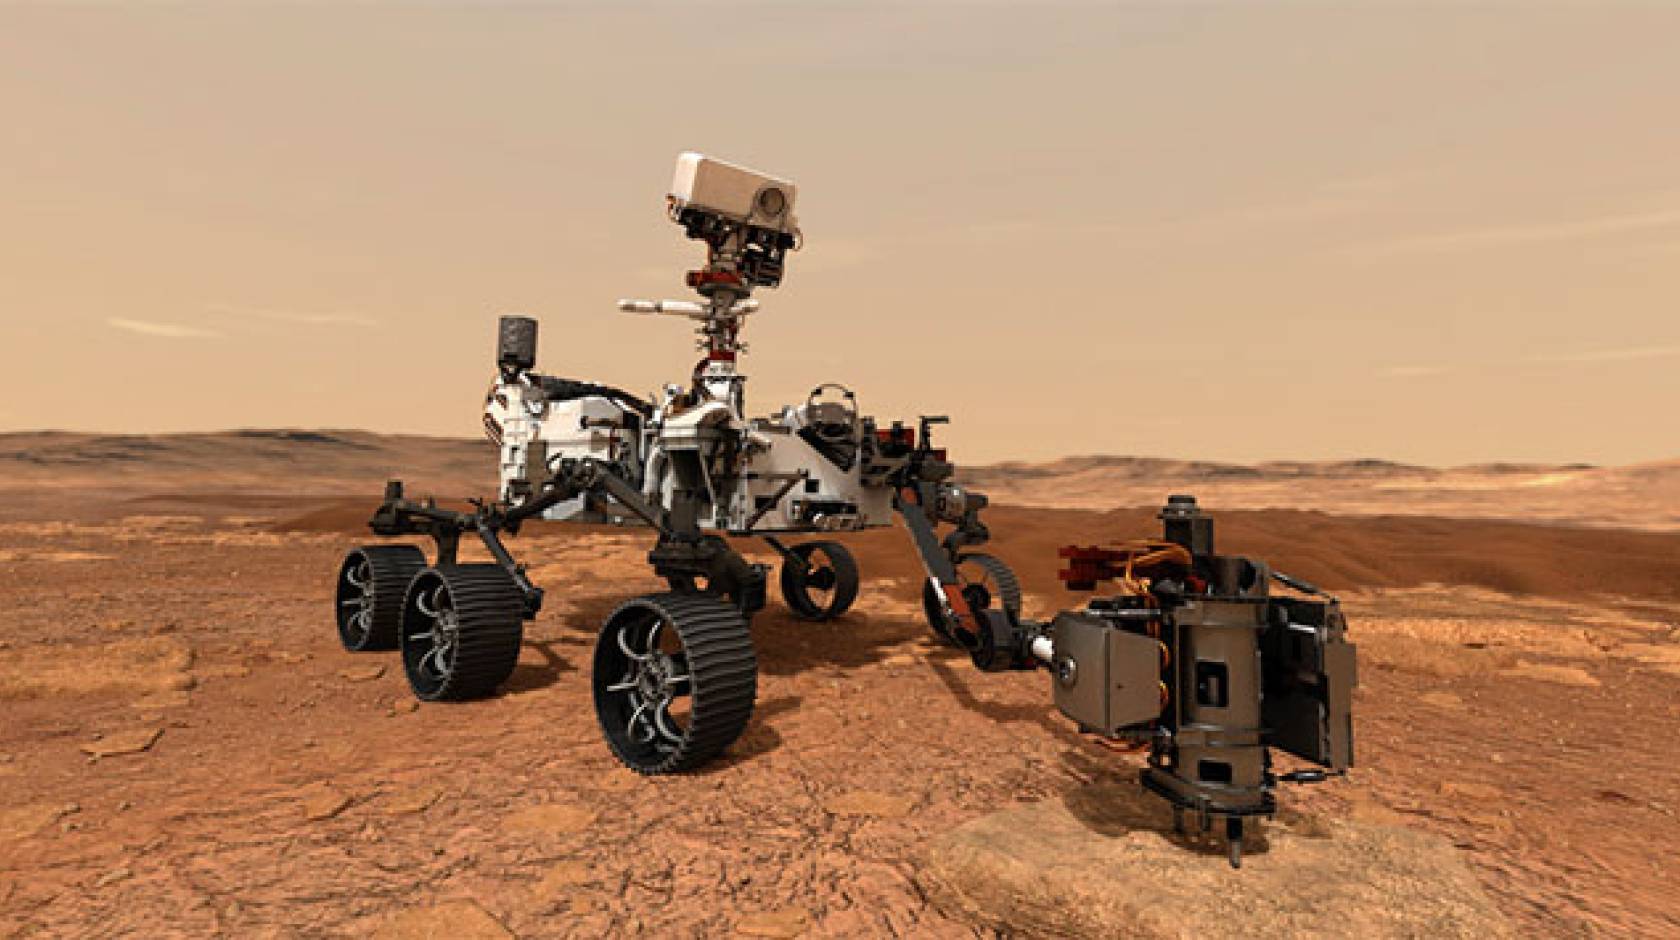 Mars rover on Mars visualization